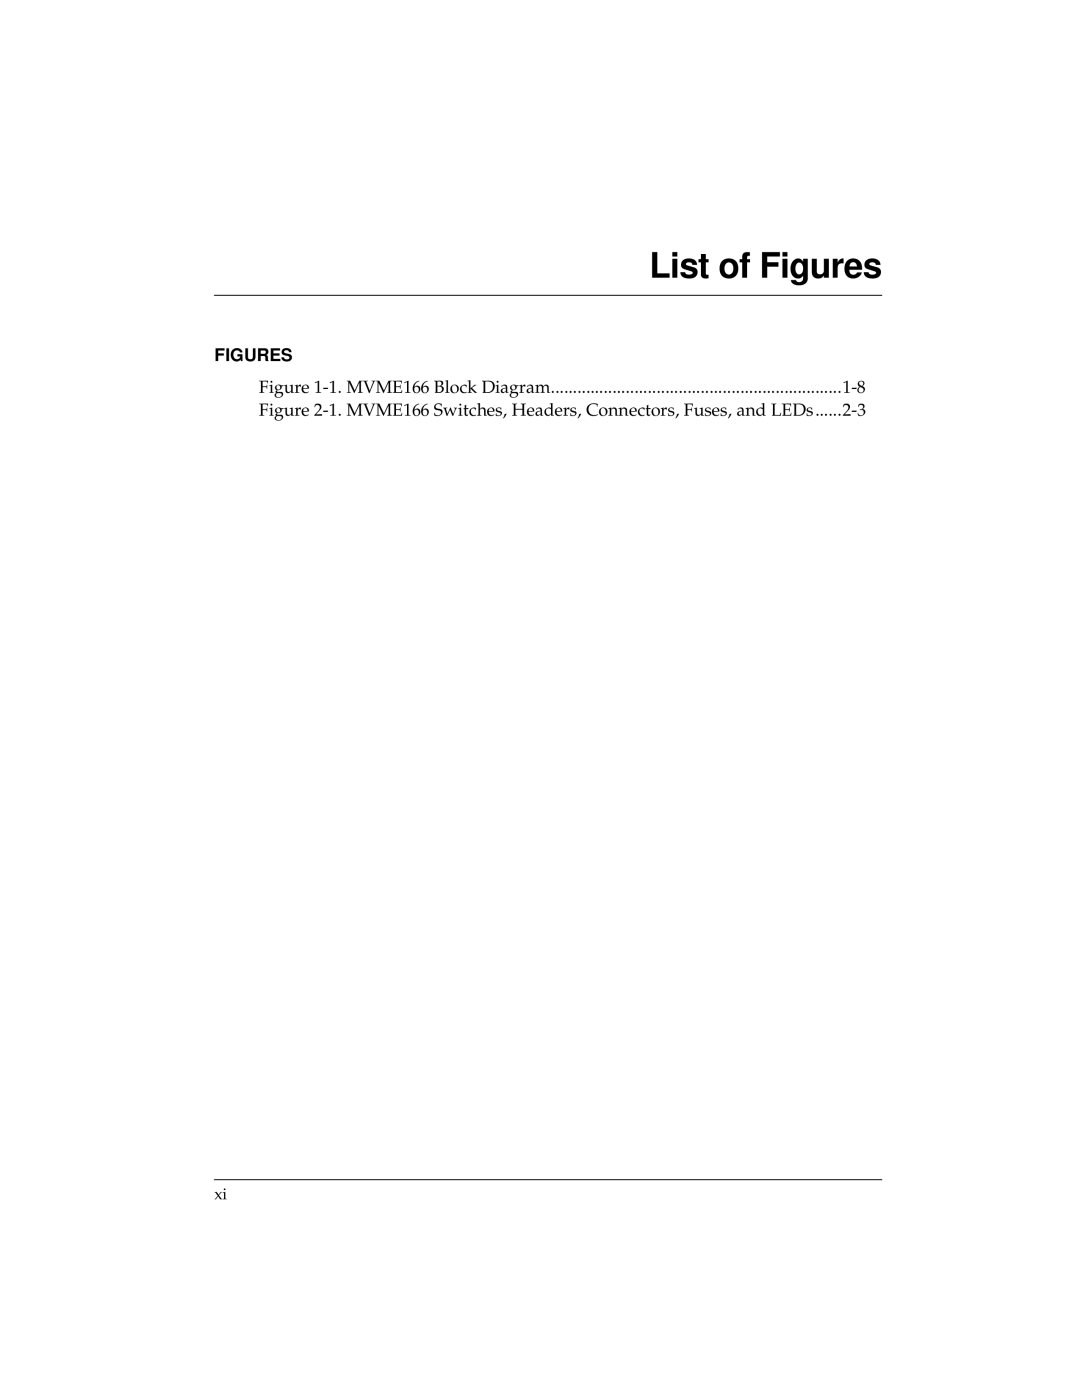 Motorola MVME166IG/D2 manual List of Figures 